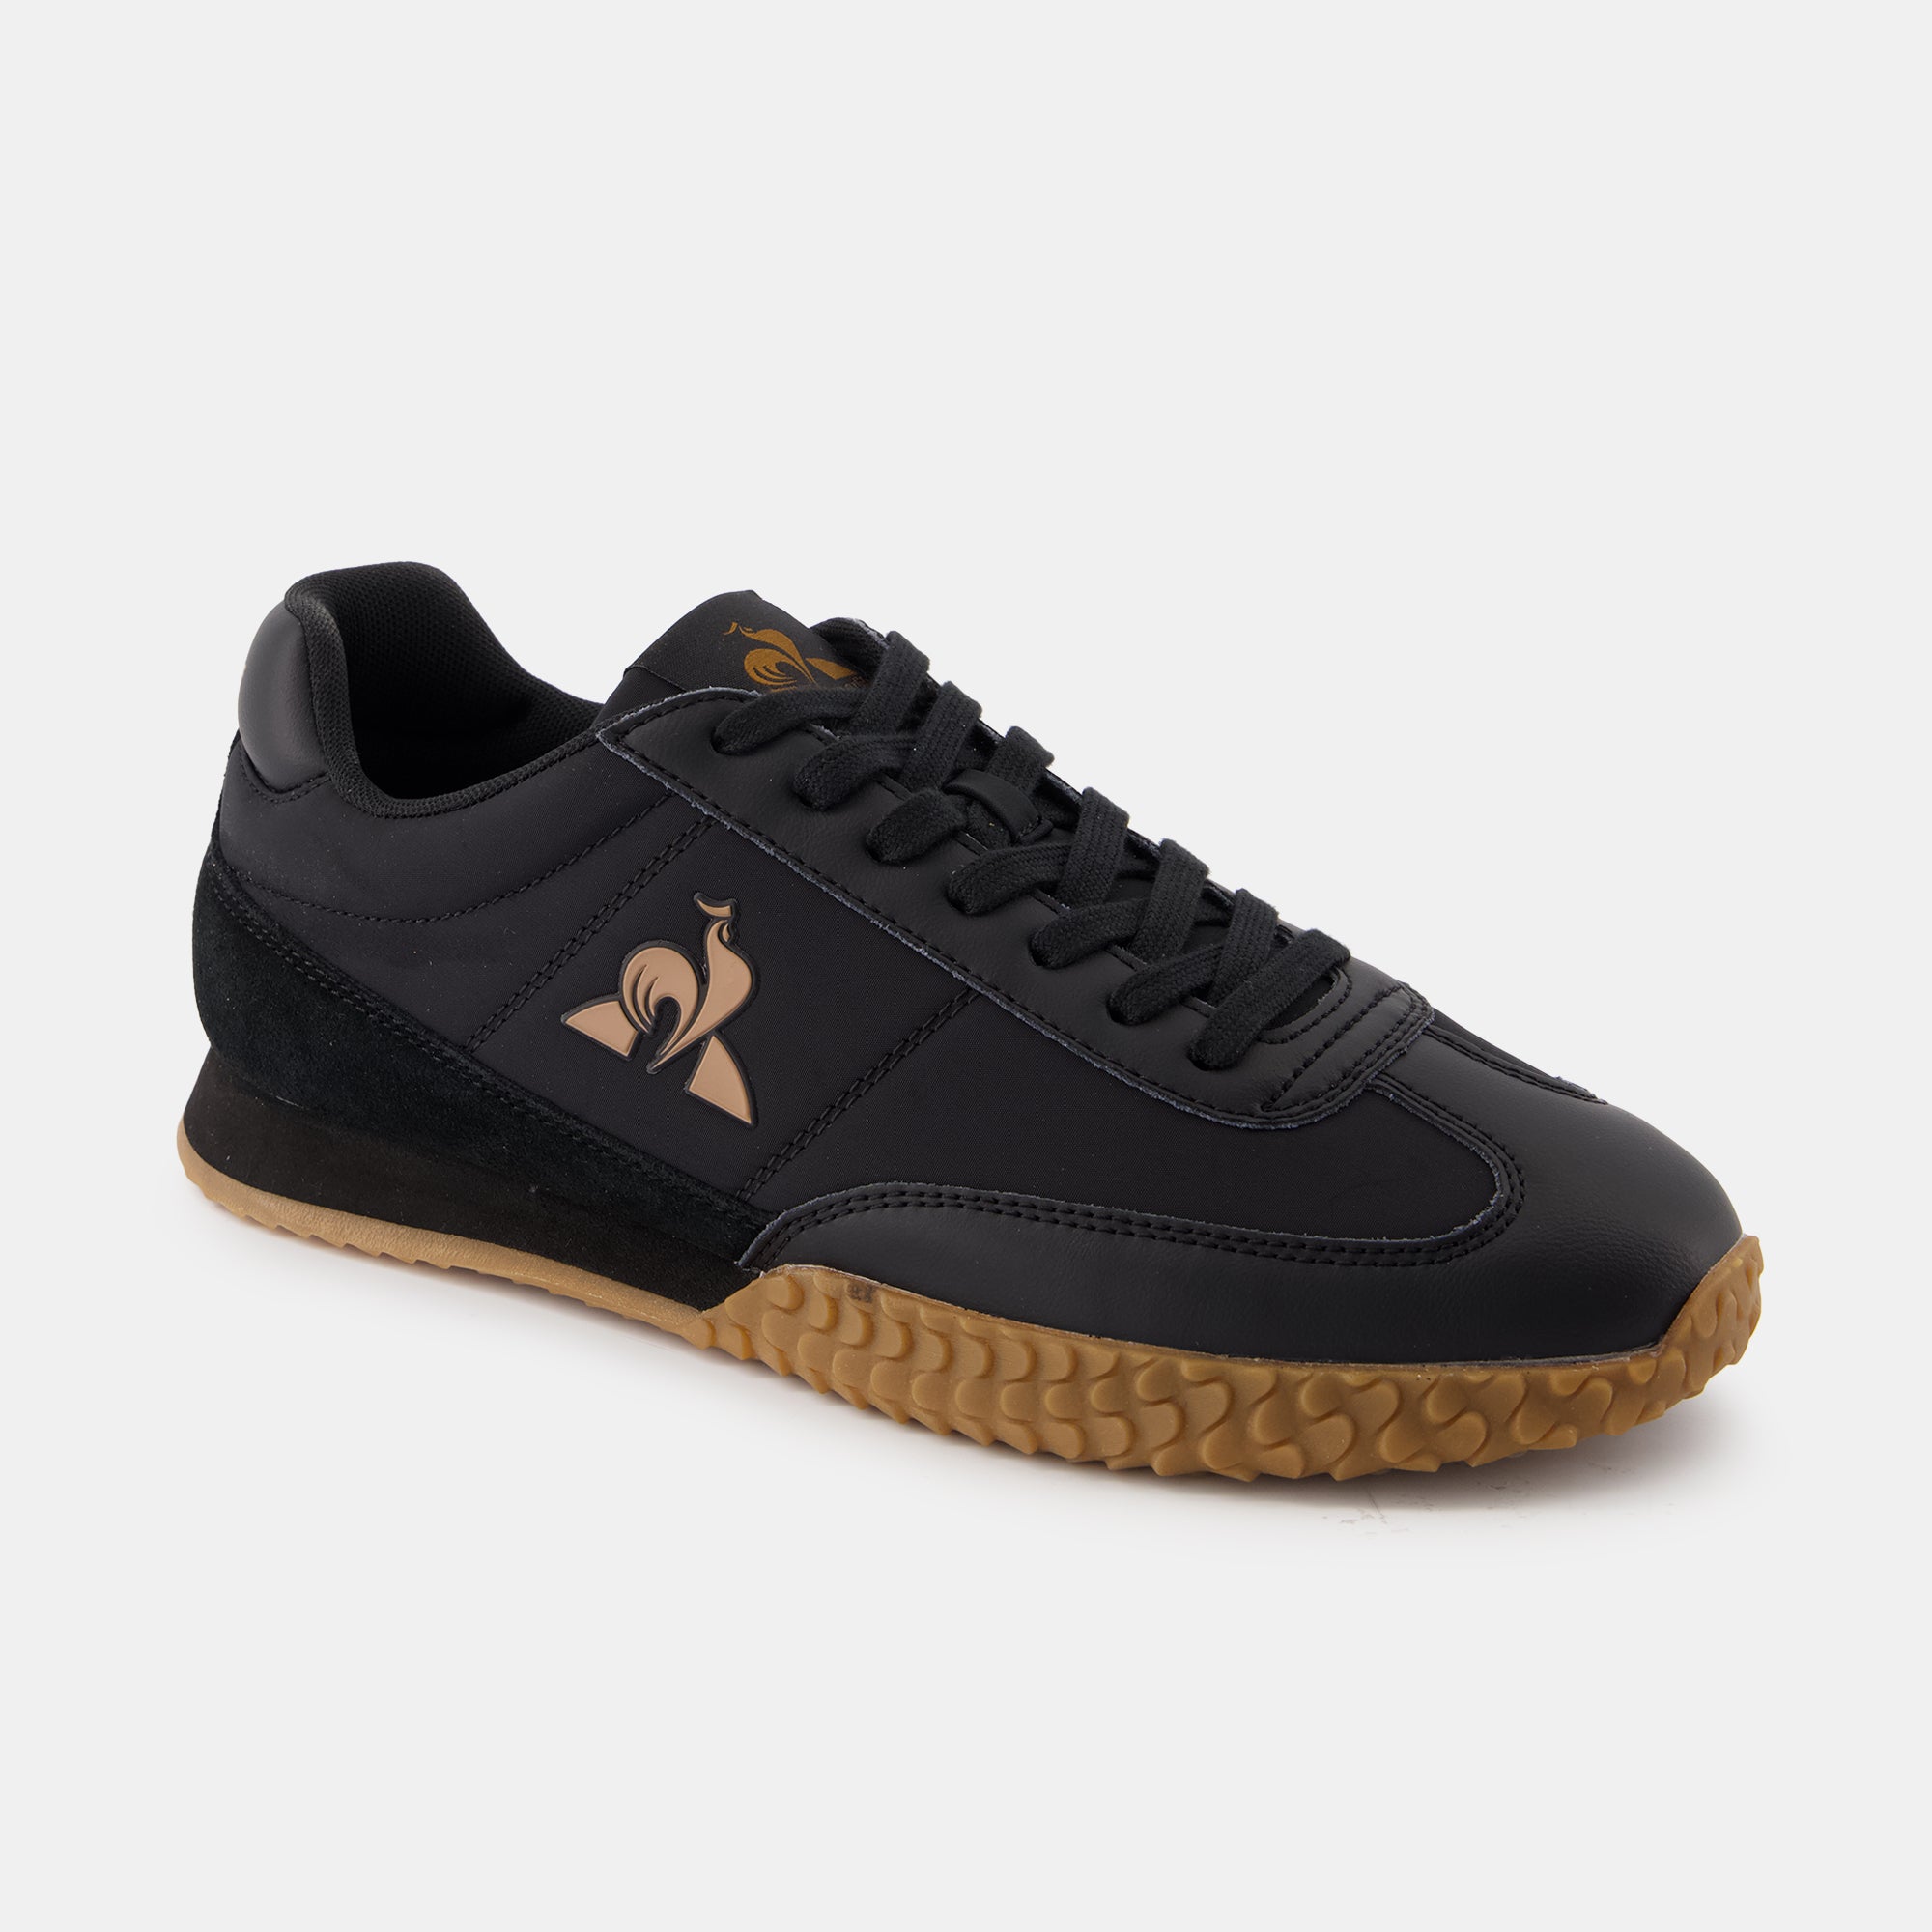 2422891-VELOCE black/gum  | Shoes VELOCE Unisex